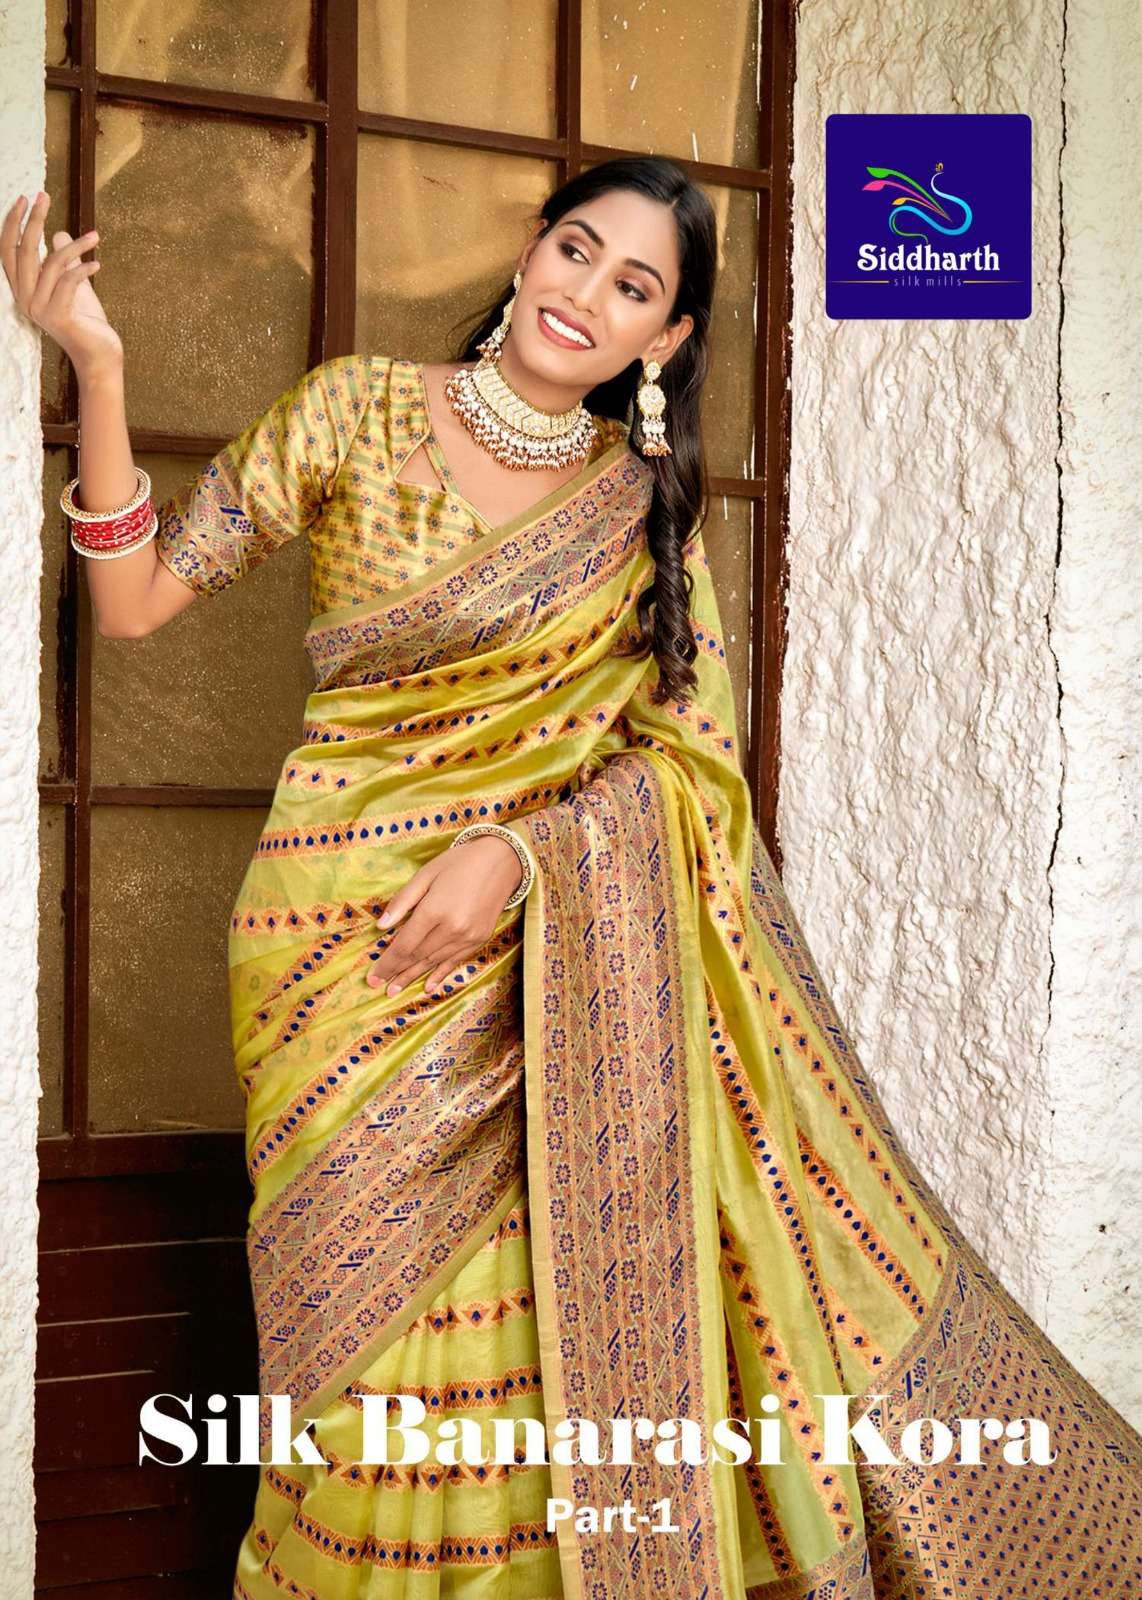 siddharth silk mills silk banarsi kora beautiful function wear sarees